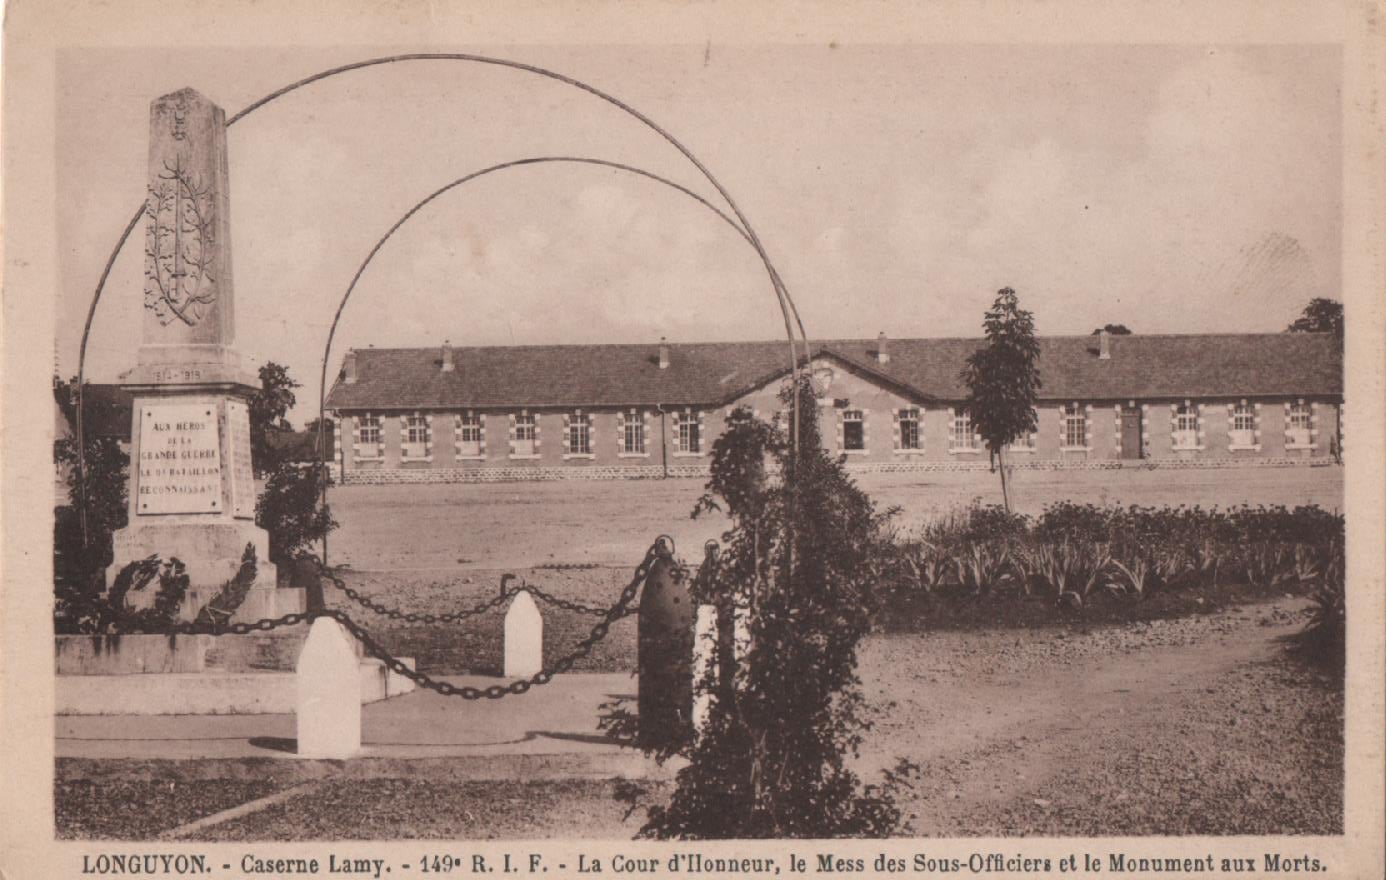 Ligne Maginot - LONGUYON - CASERNE LAMY - (Camp de sureté) - Carte postale 